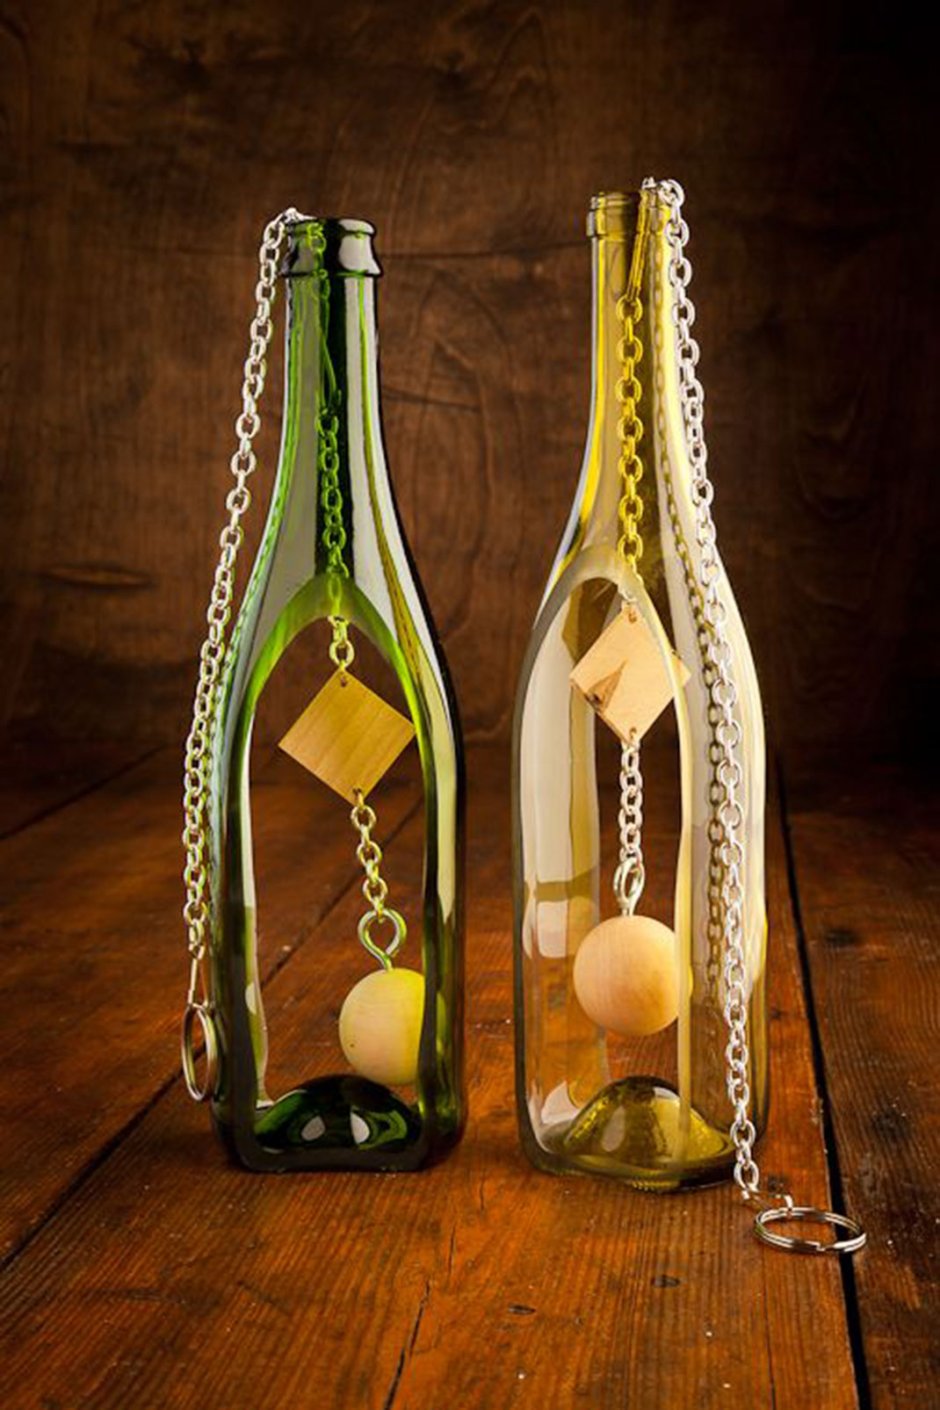 Декор стеклянных бутылок